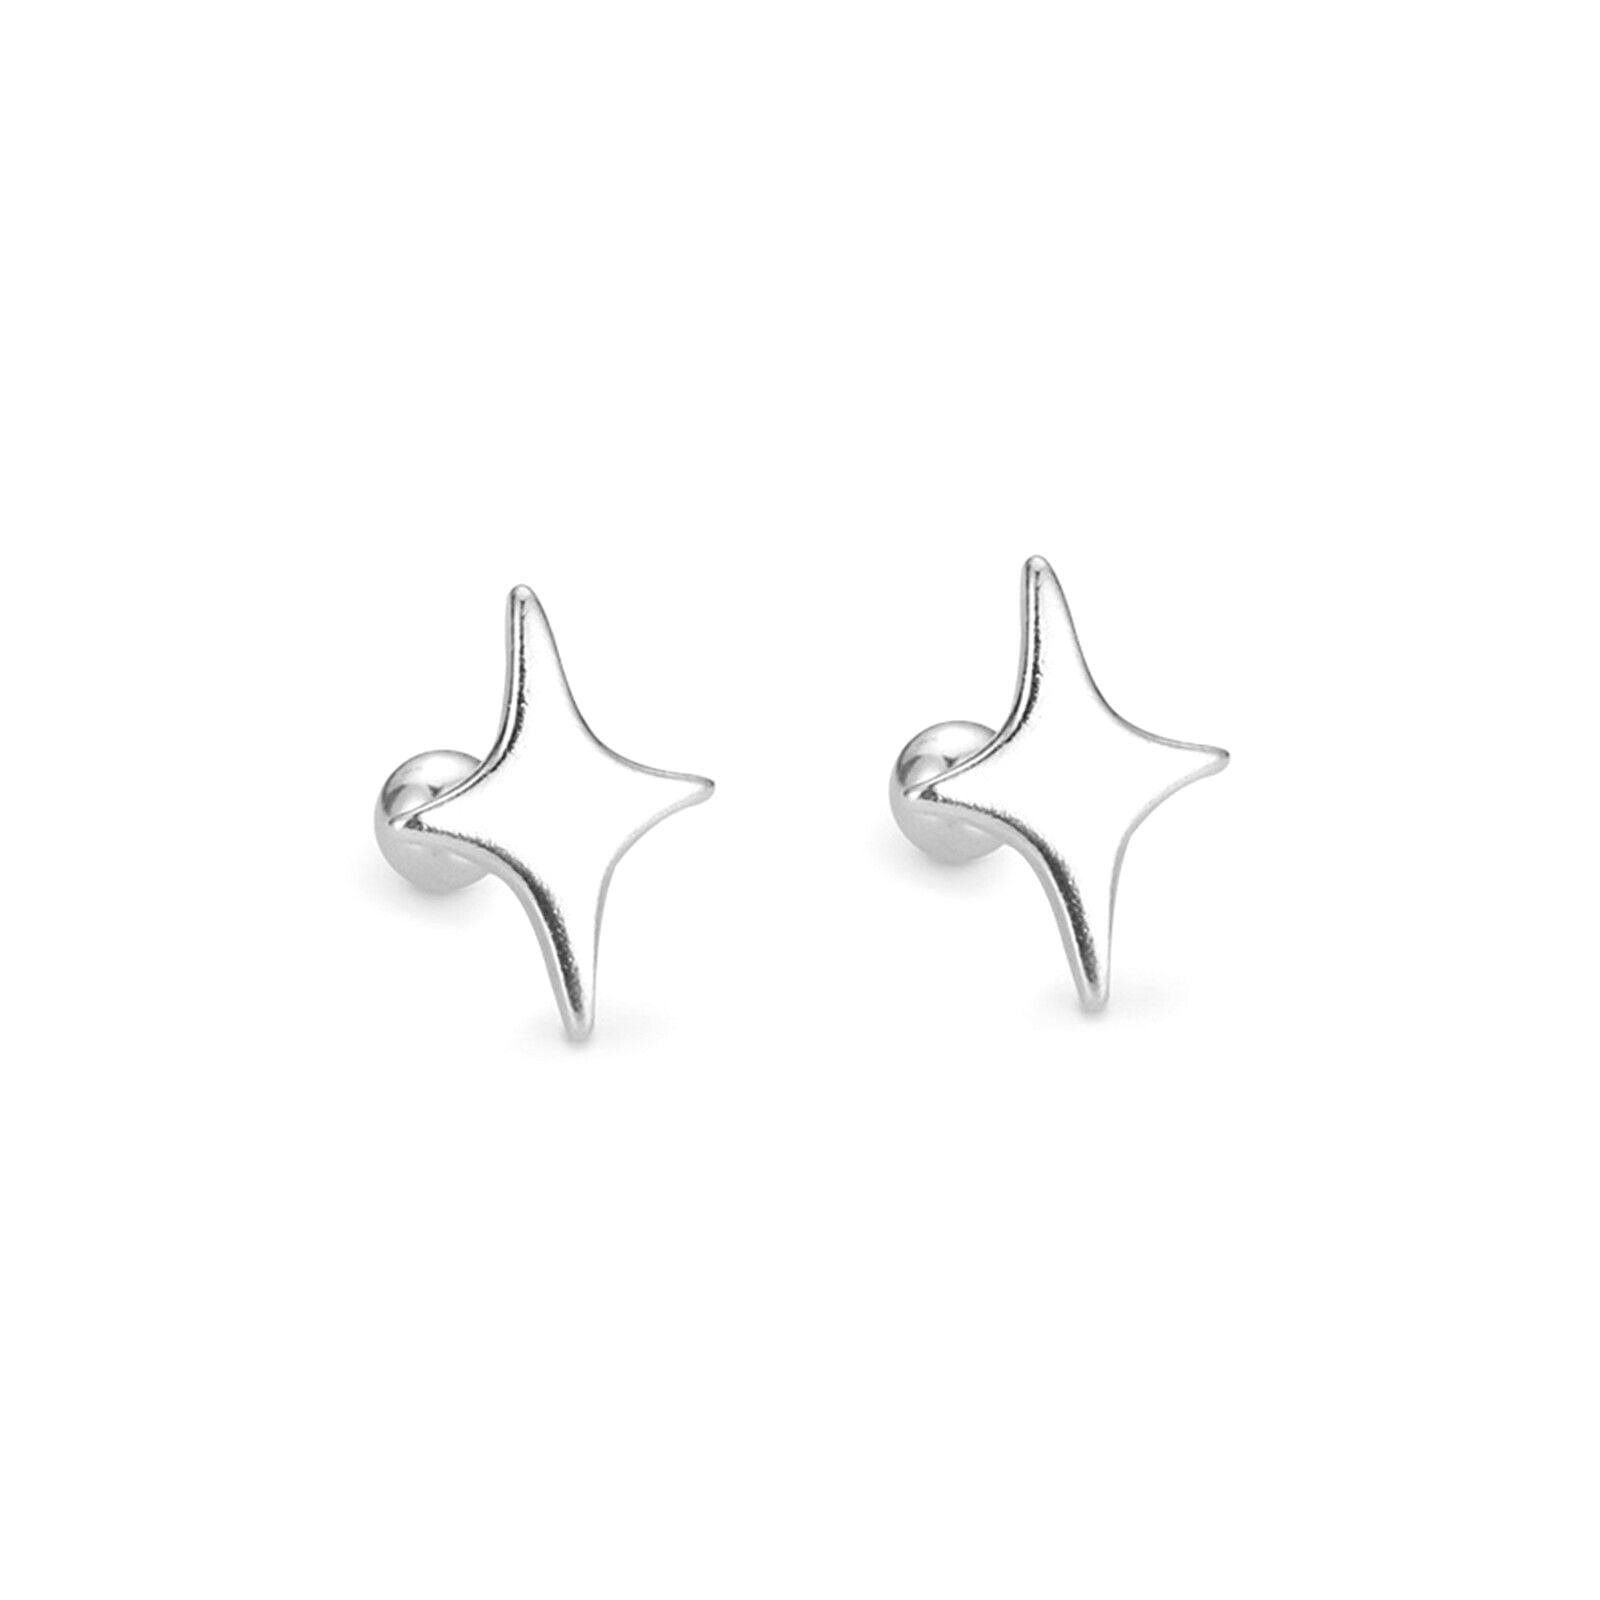 999 Fine Silver 4-Point Star Screw Back Earrings with 3mm Ball Barbell Bead - sugarkittenlondon